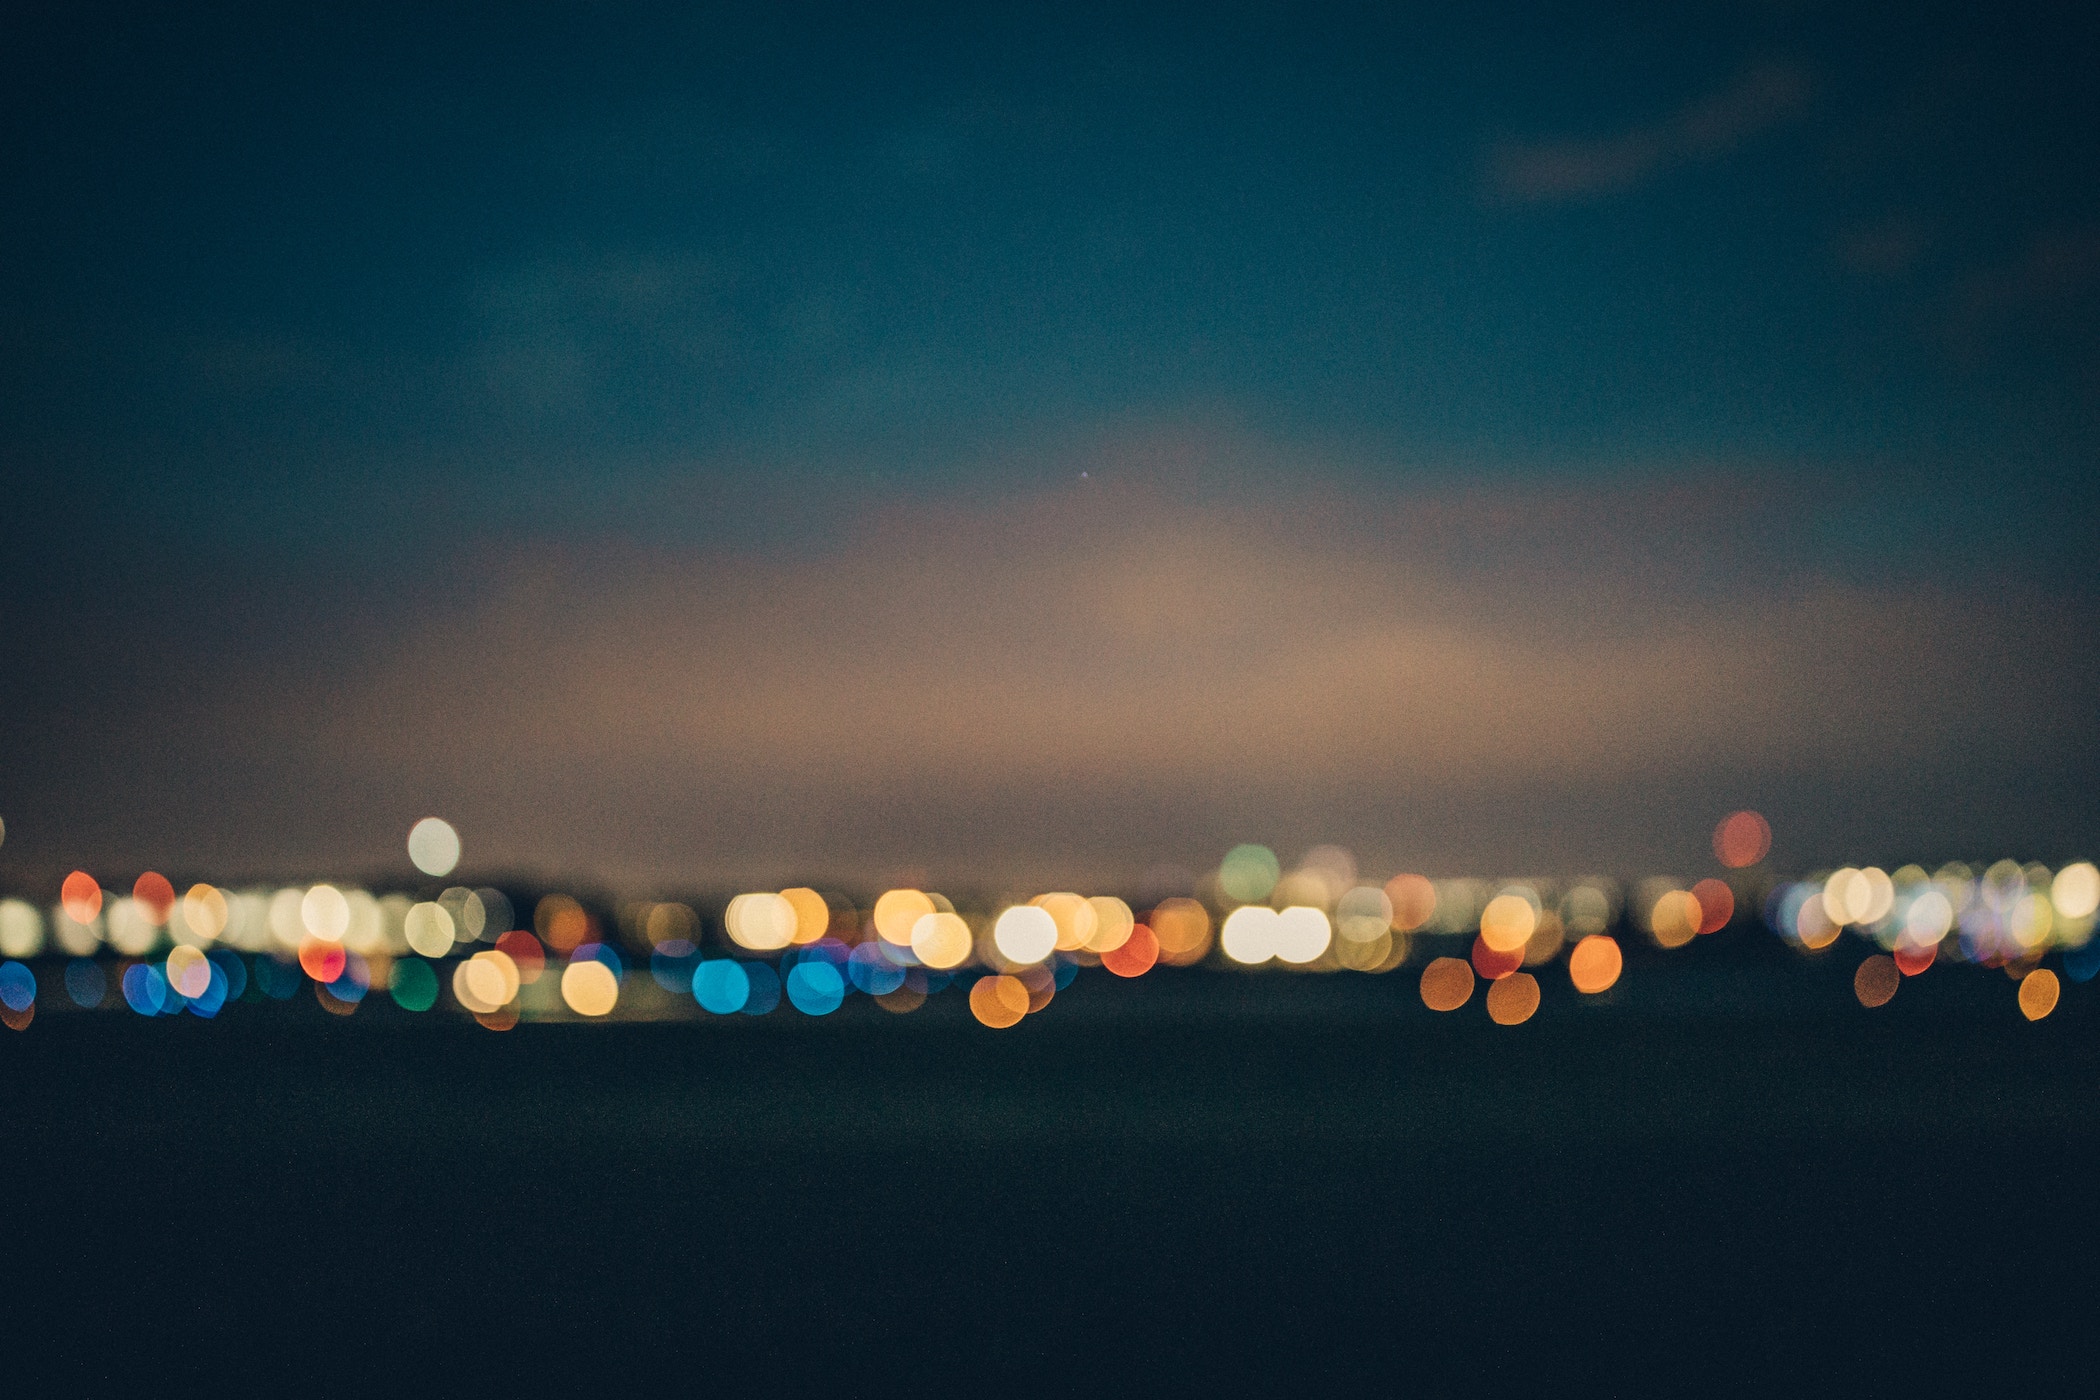 Blurry city lights at night